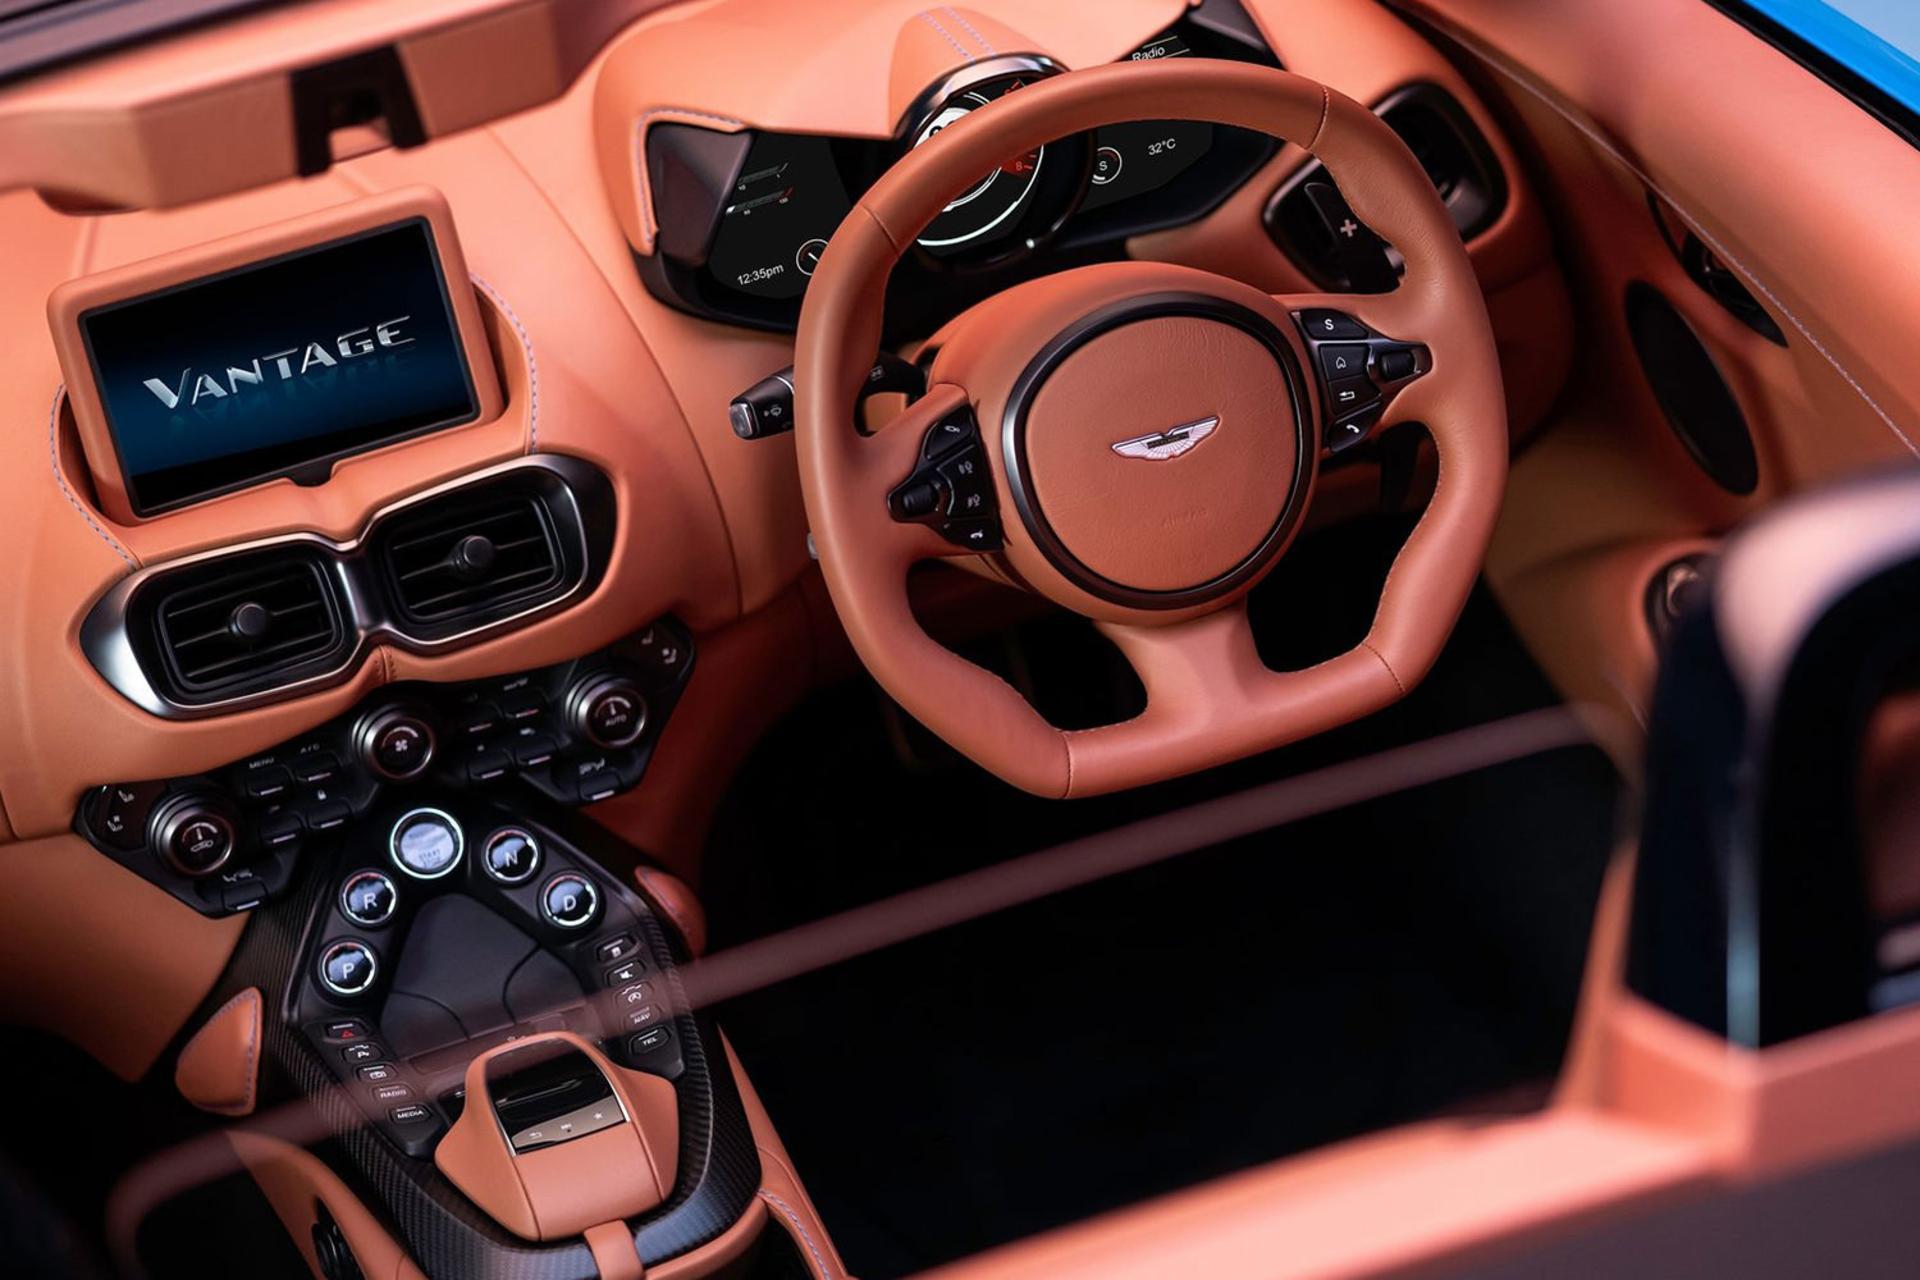 Aston Martin Vantage Roadster 2020